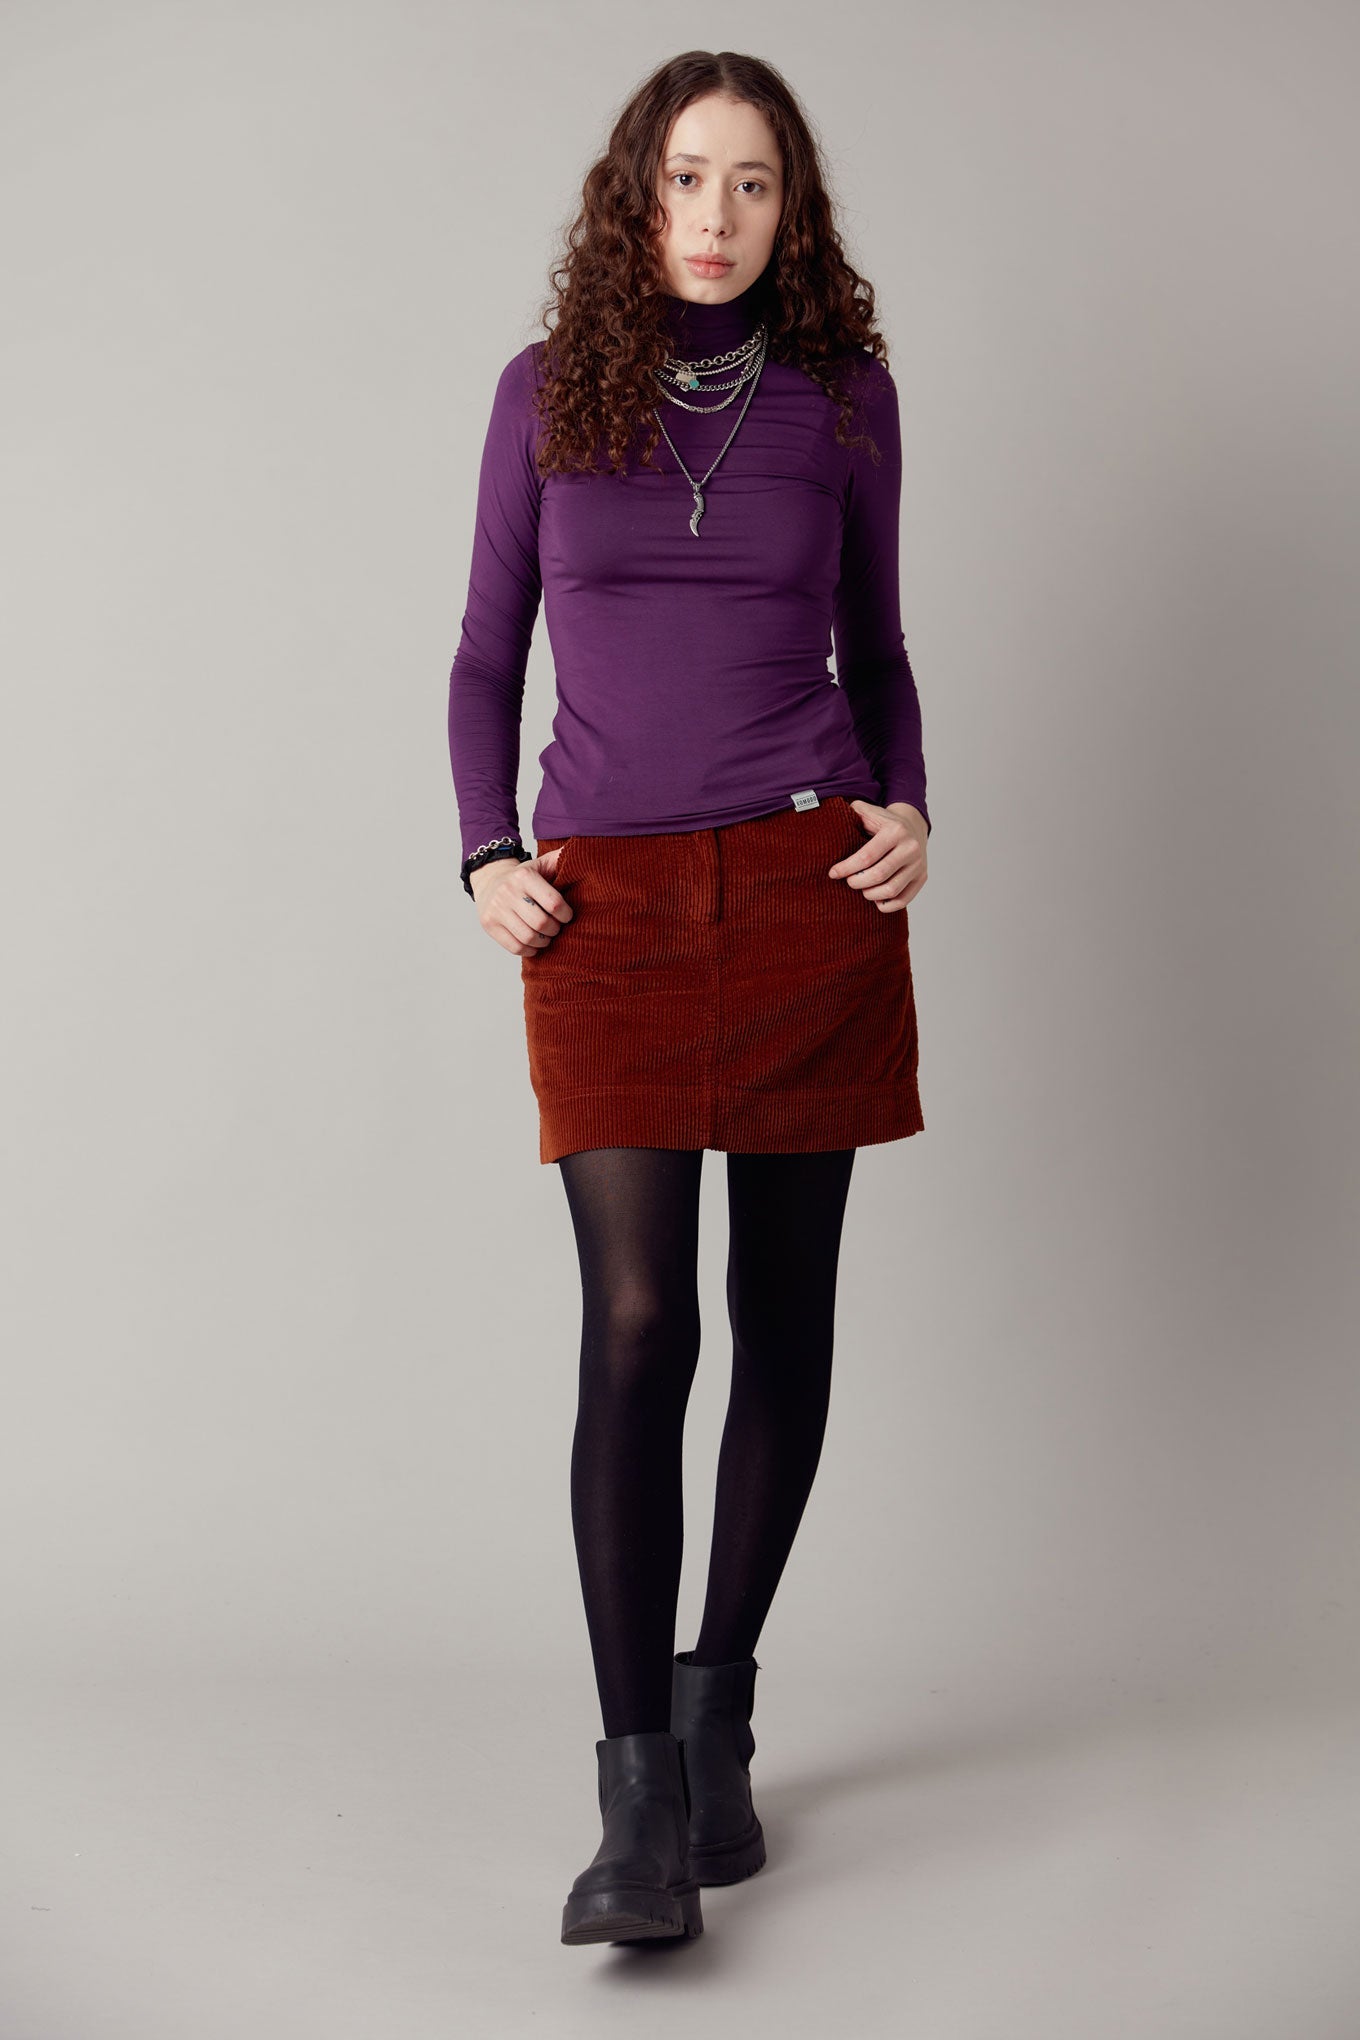 Violet, long-sleeved top SKINILLA made of modal by Komodo